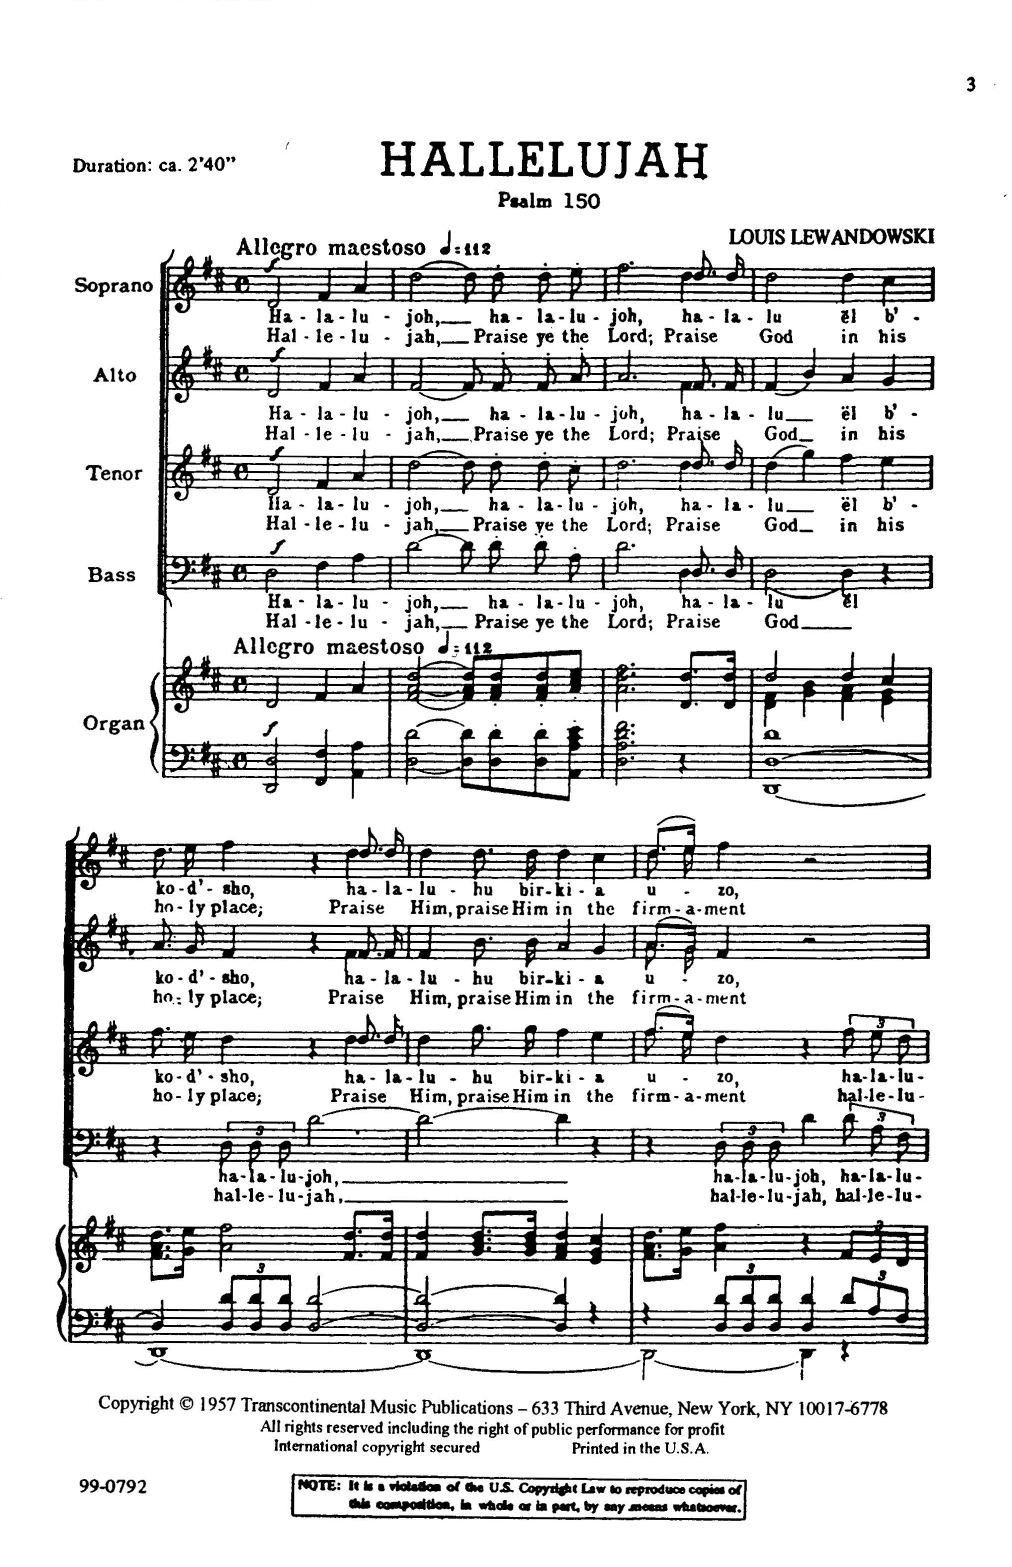 Download Louis Lewandowski Hallelujah (Psalm 150) Sheet Music